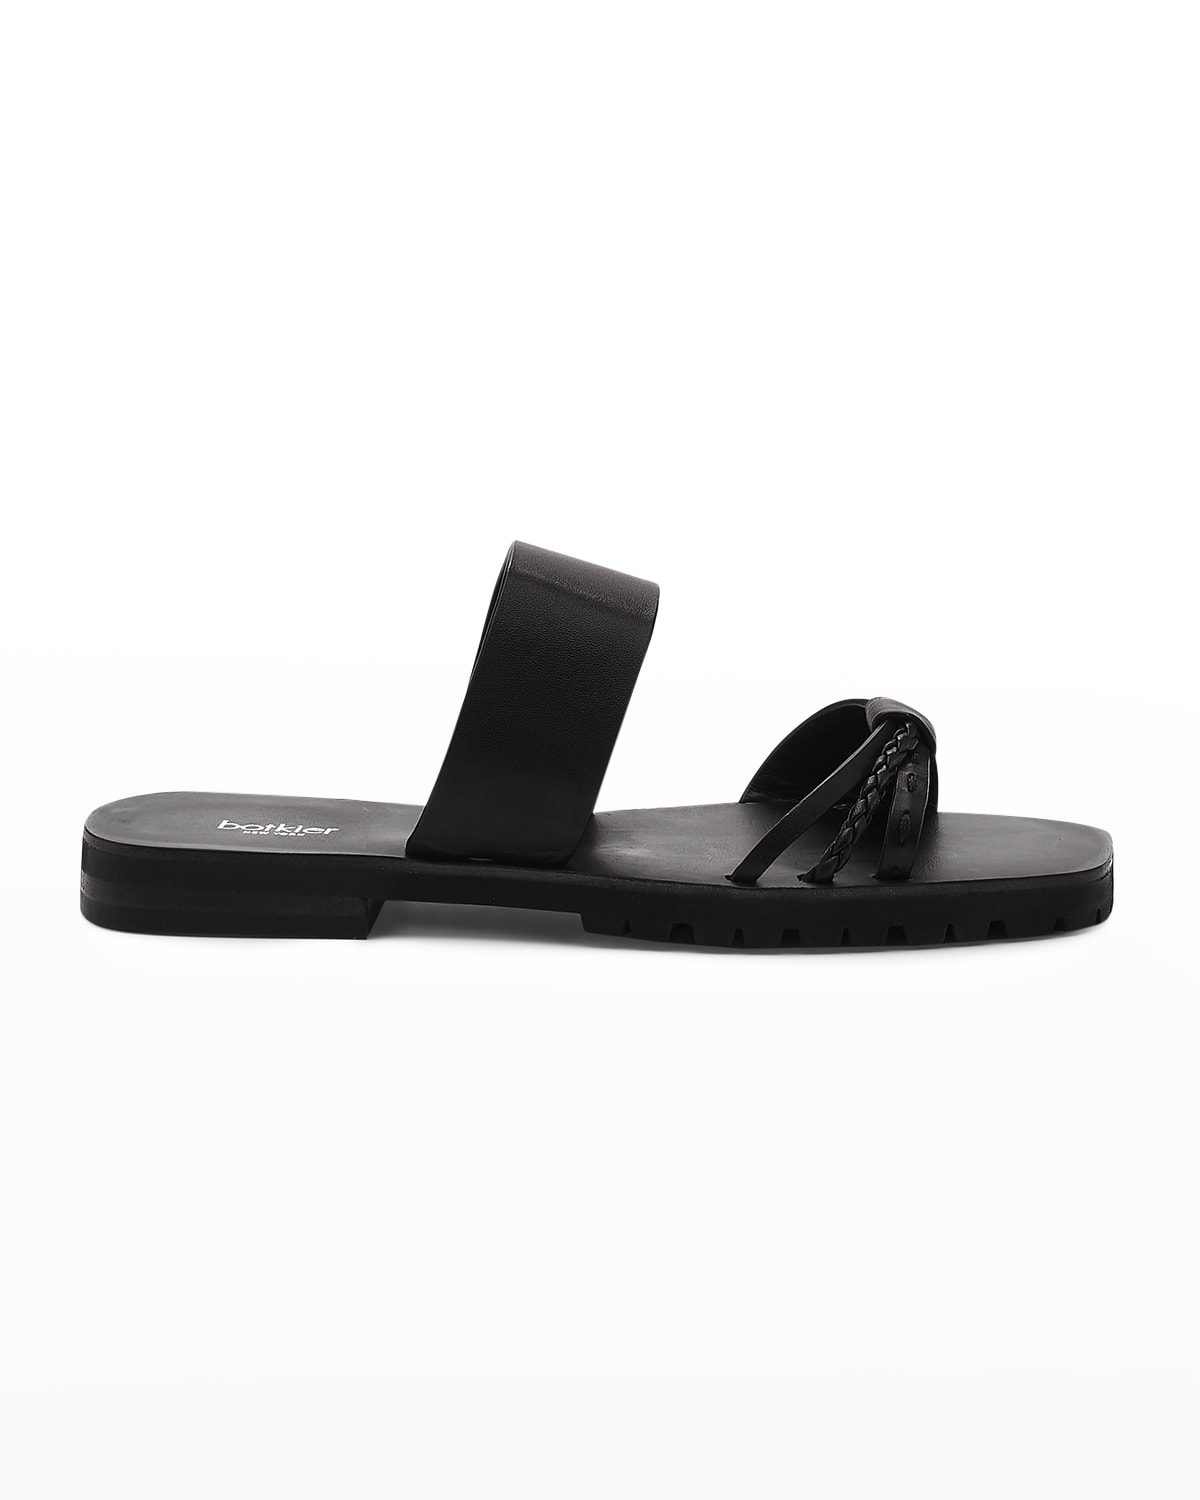 Stuart Weitzman Flat Leather Studded Sandals, Black | Neiman Marcus